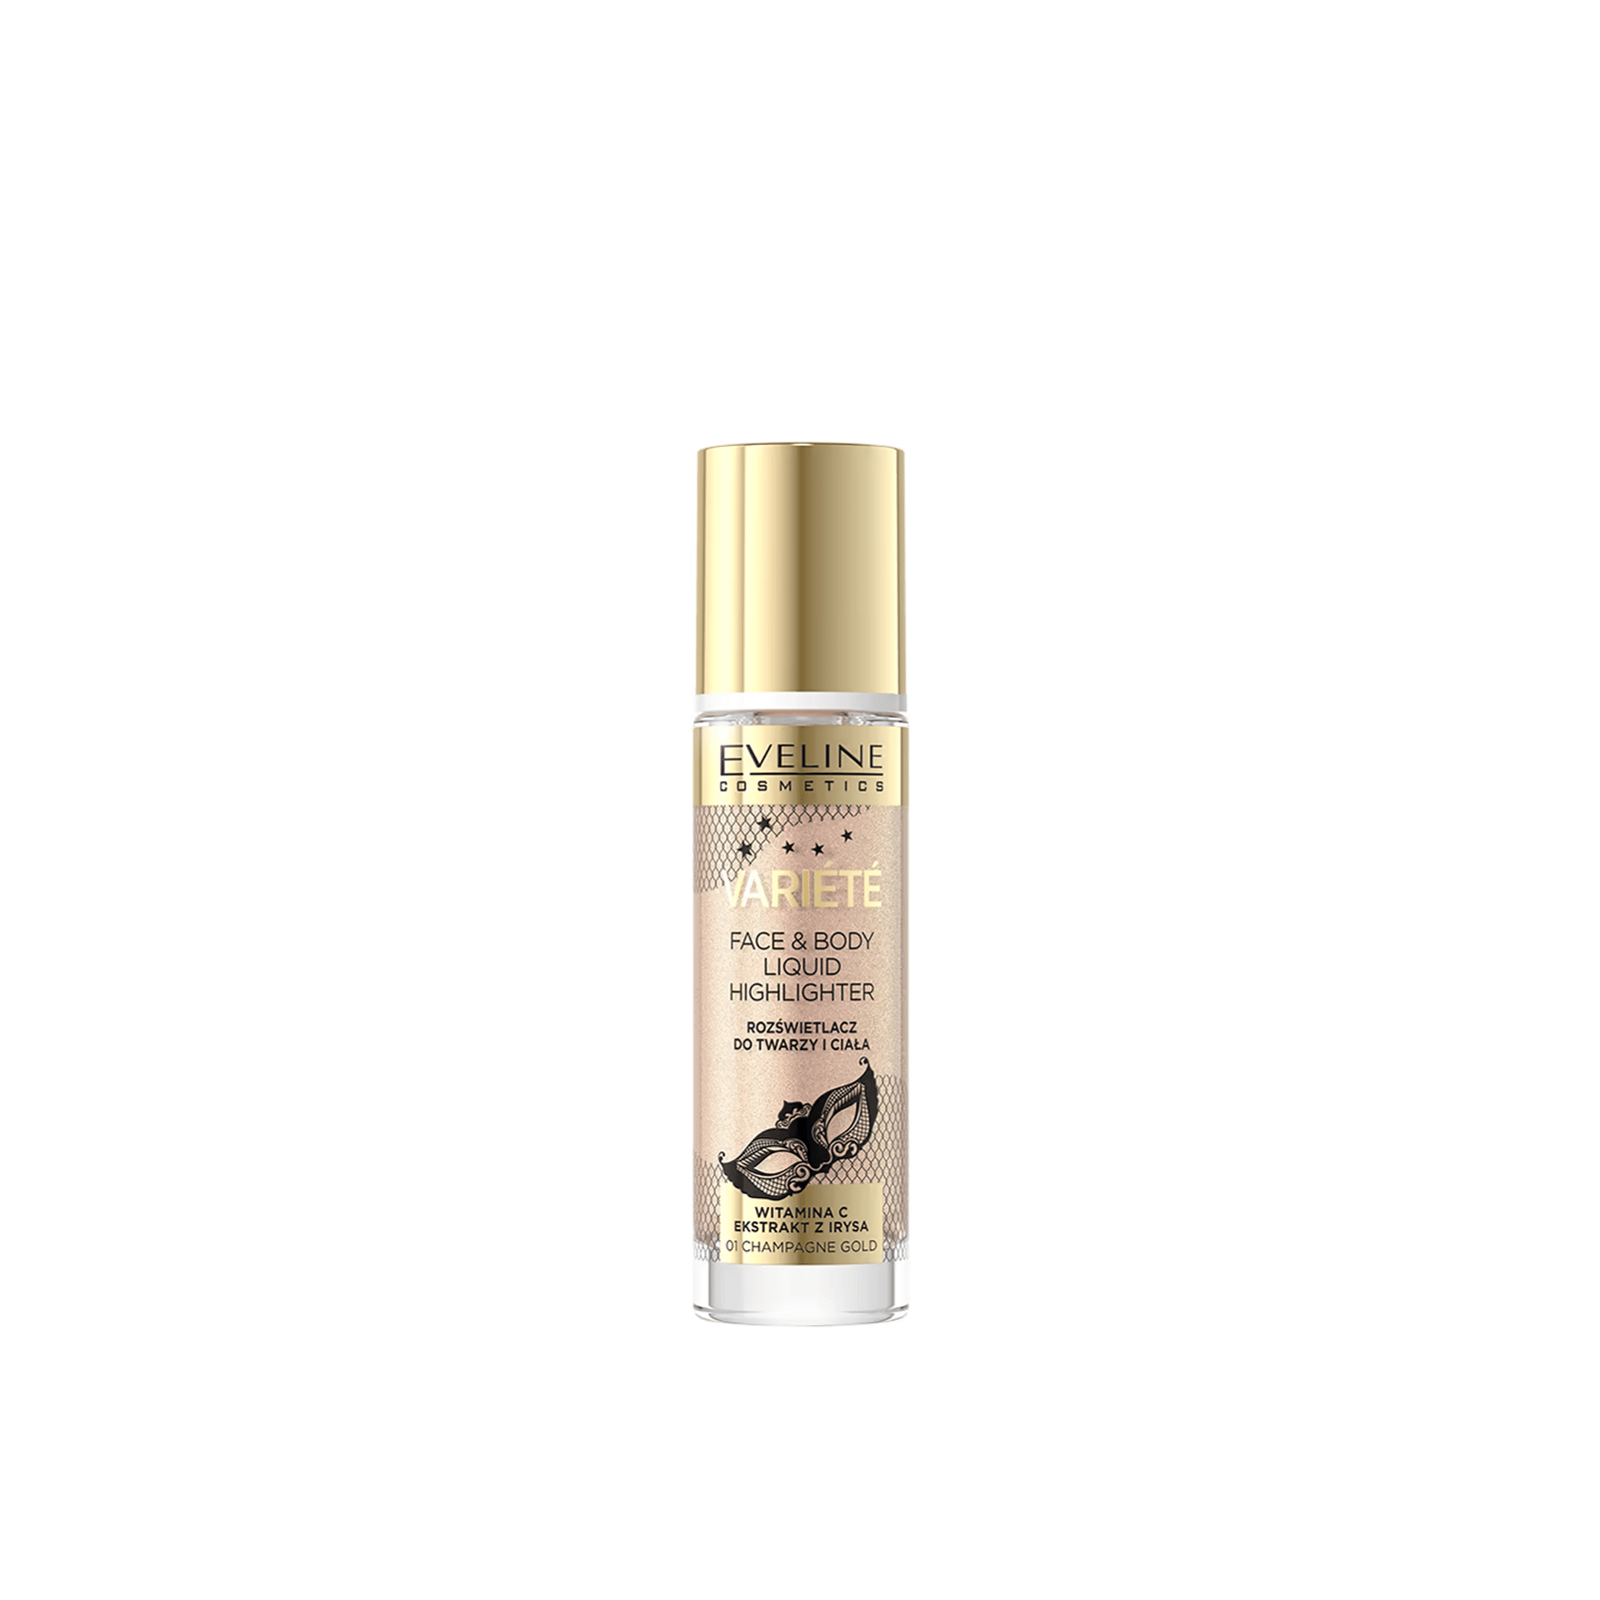 Eveline Cosmetics Variété Face & Body Liquid Highlighter 01 Champagne Gold 30ml (1.06 fl oz)